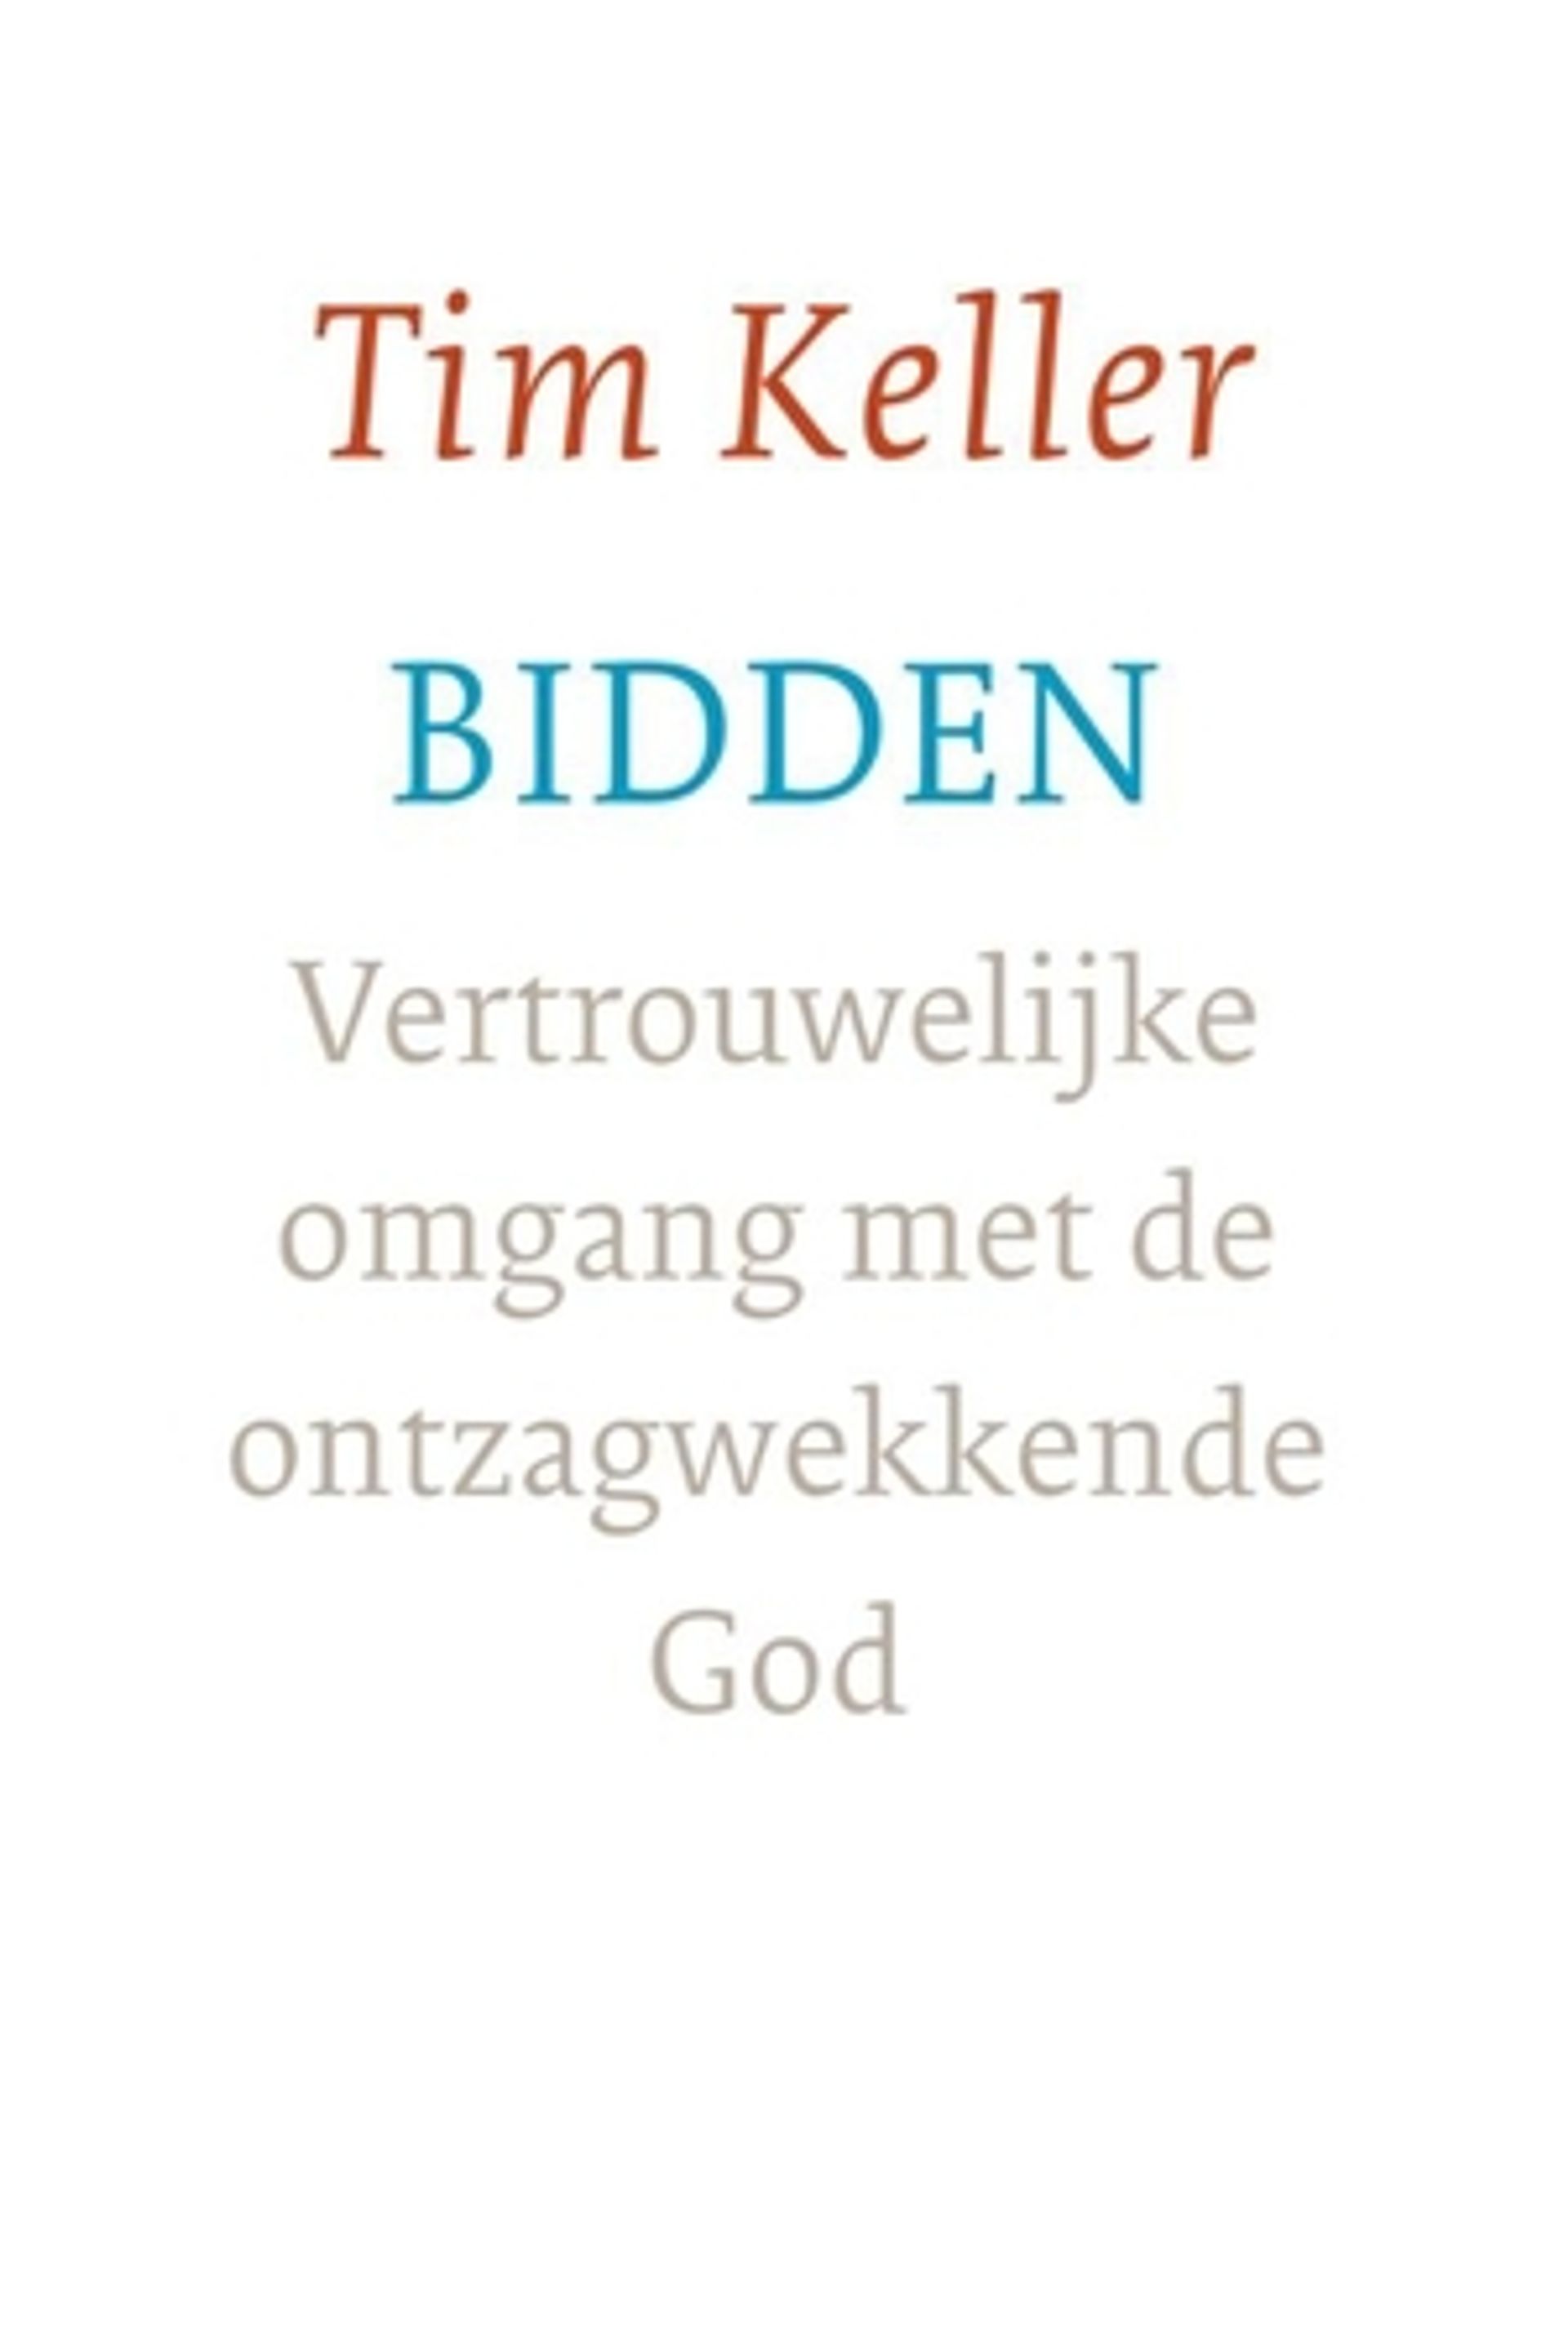 Tim Keller boek Bidden cover